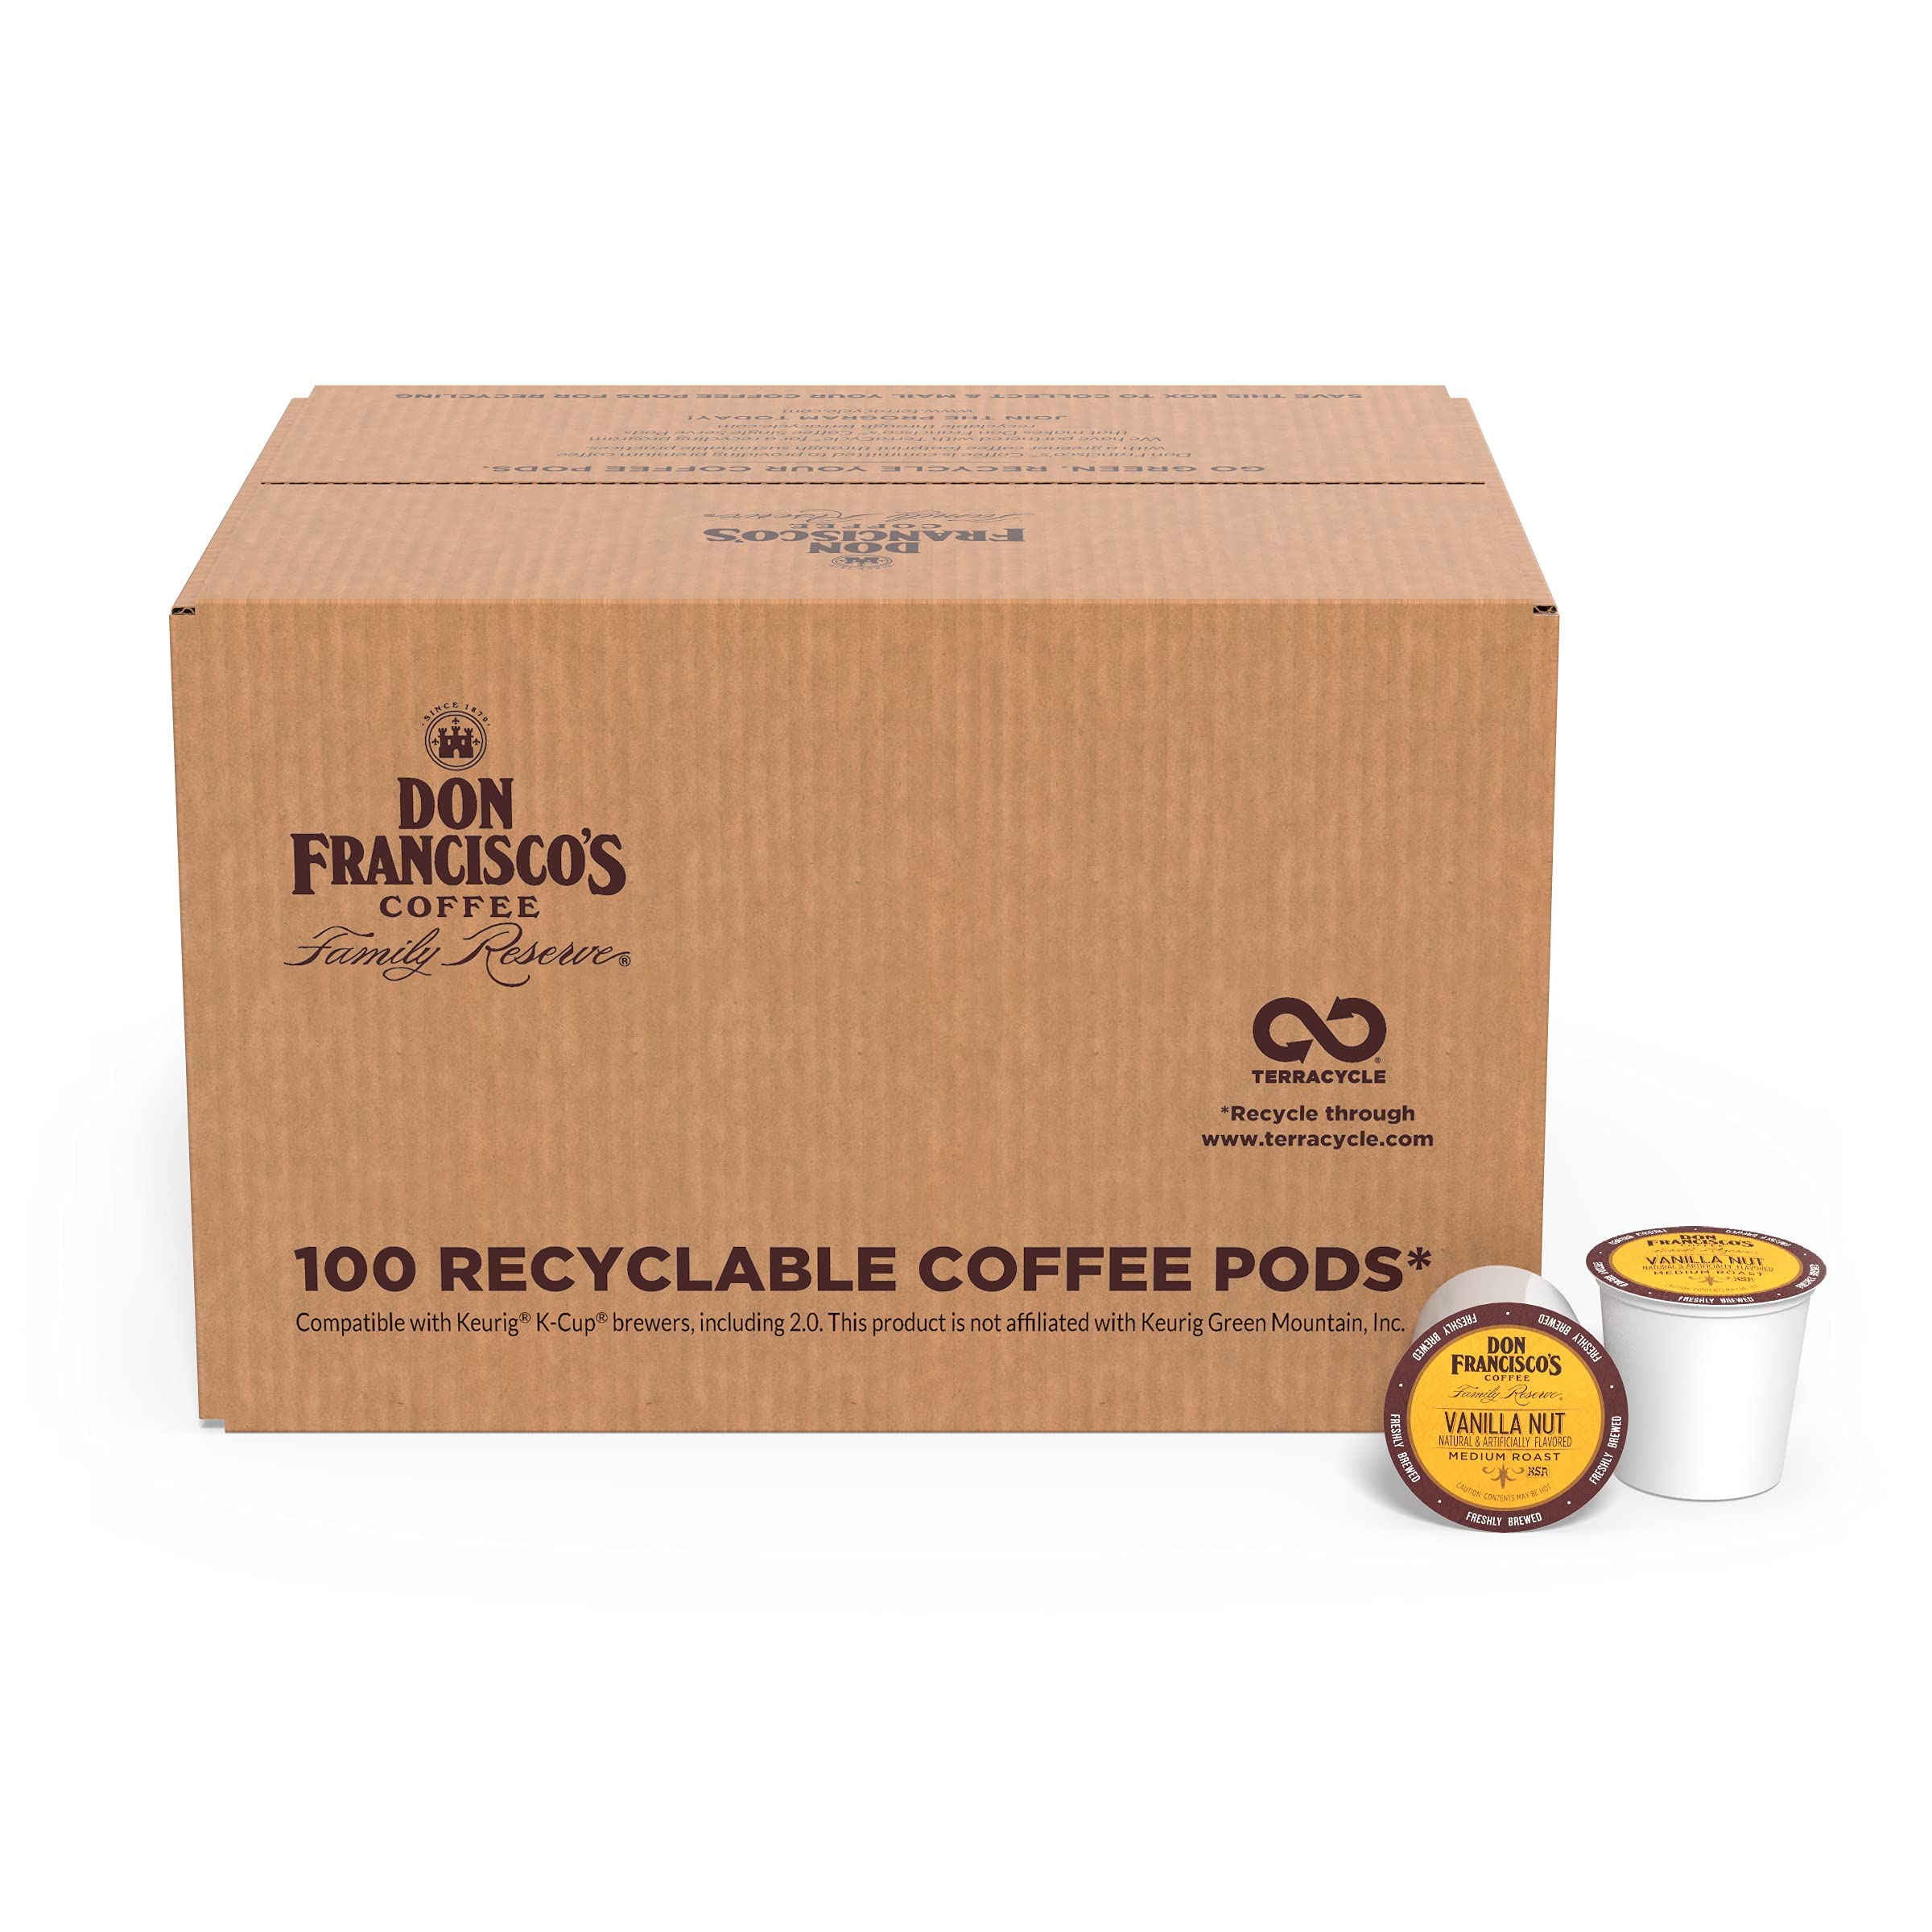 Don Francisco's Vanilla Nut Medium Roast Coffee Pods - 100 Count $26.45 w/15xS&S, $30.15 w/5% S&S at Amazon